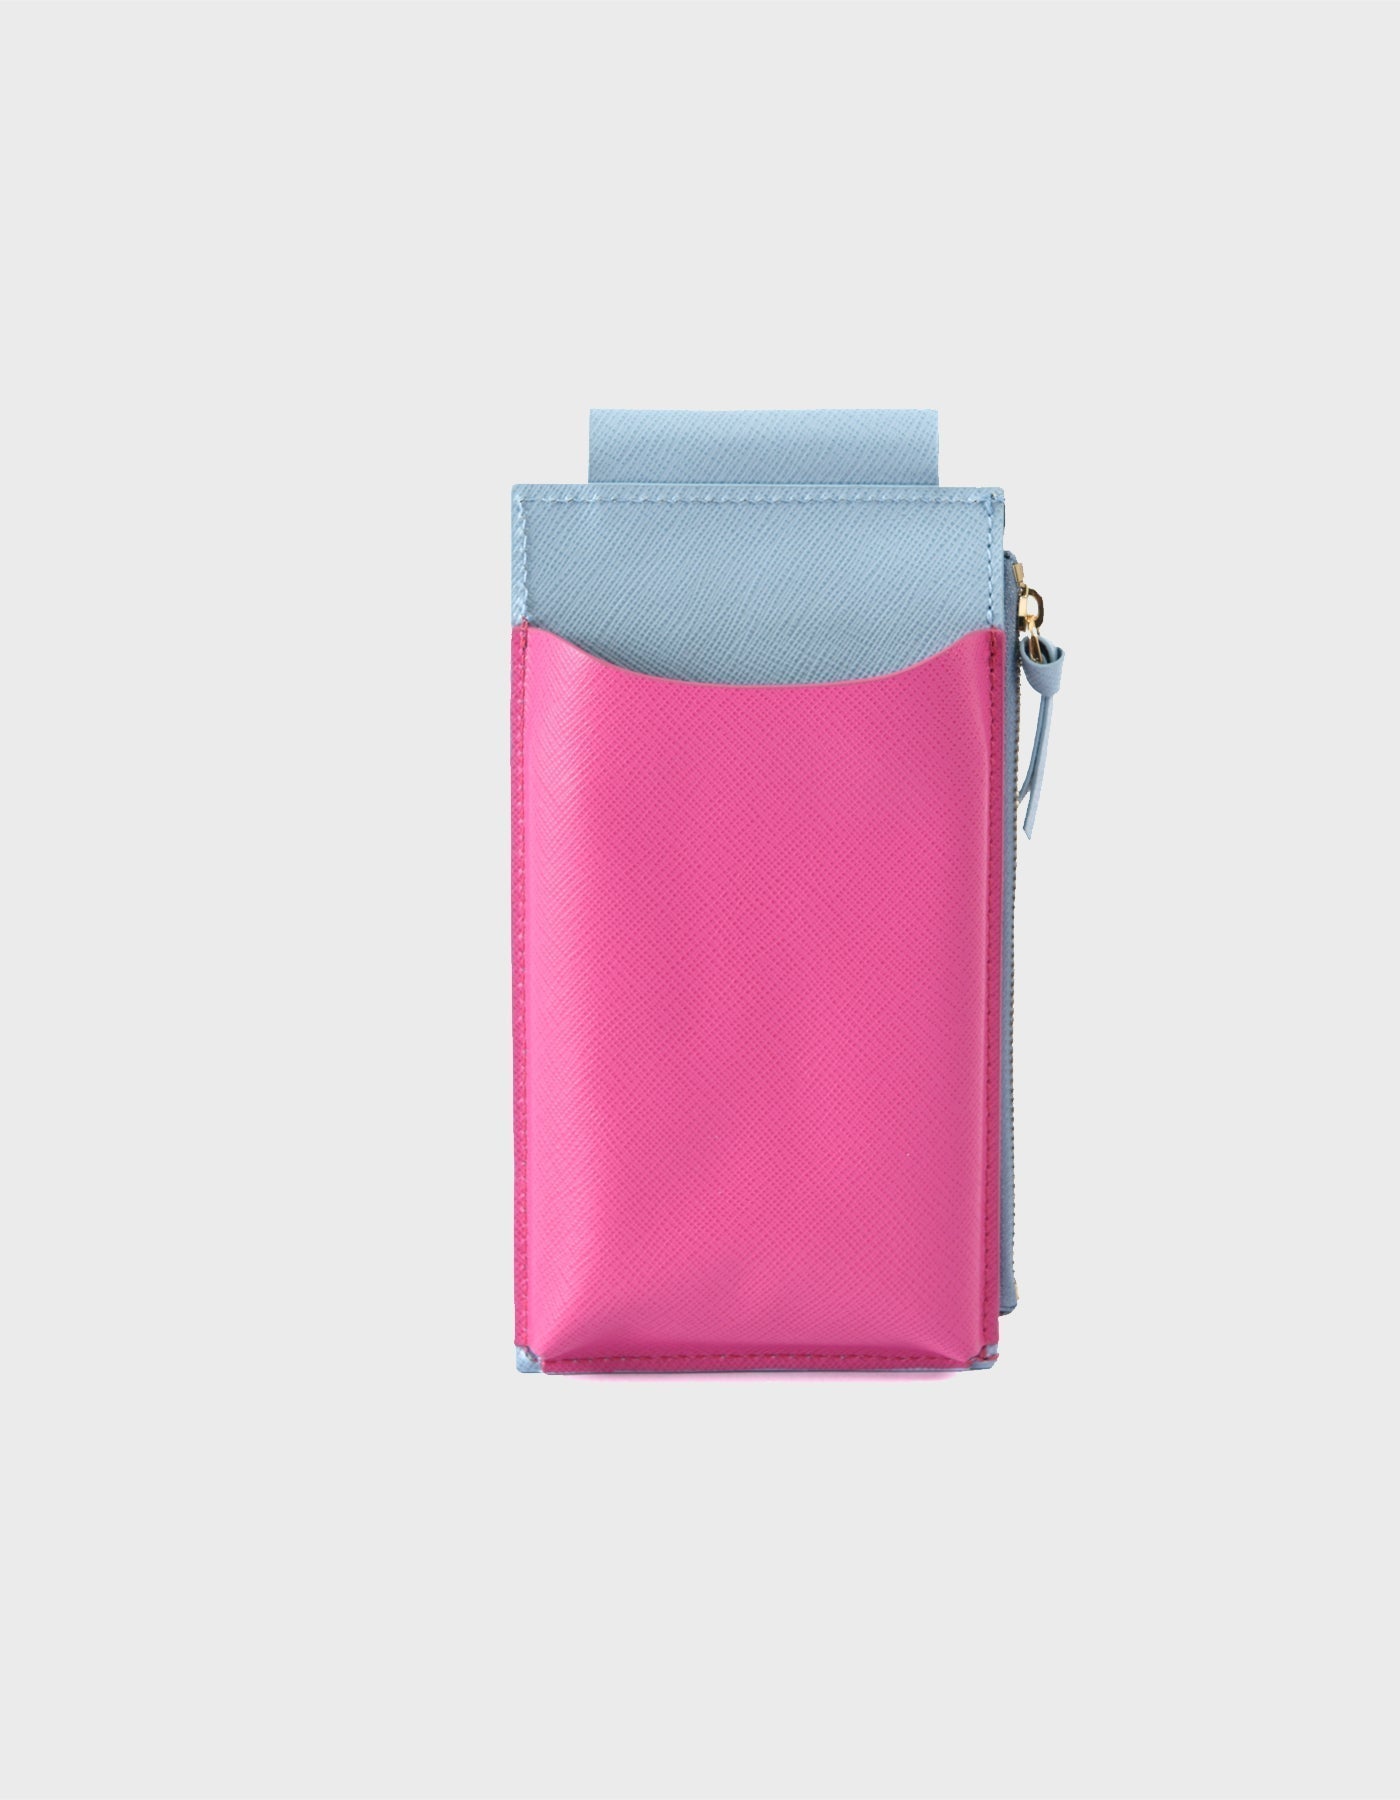 HiVa Atelier | Crossbody Phone Bag Fuchsia & Orange & Sky Blue | Beautiful and Versatile